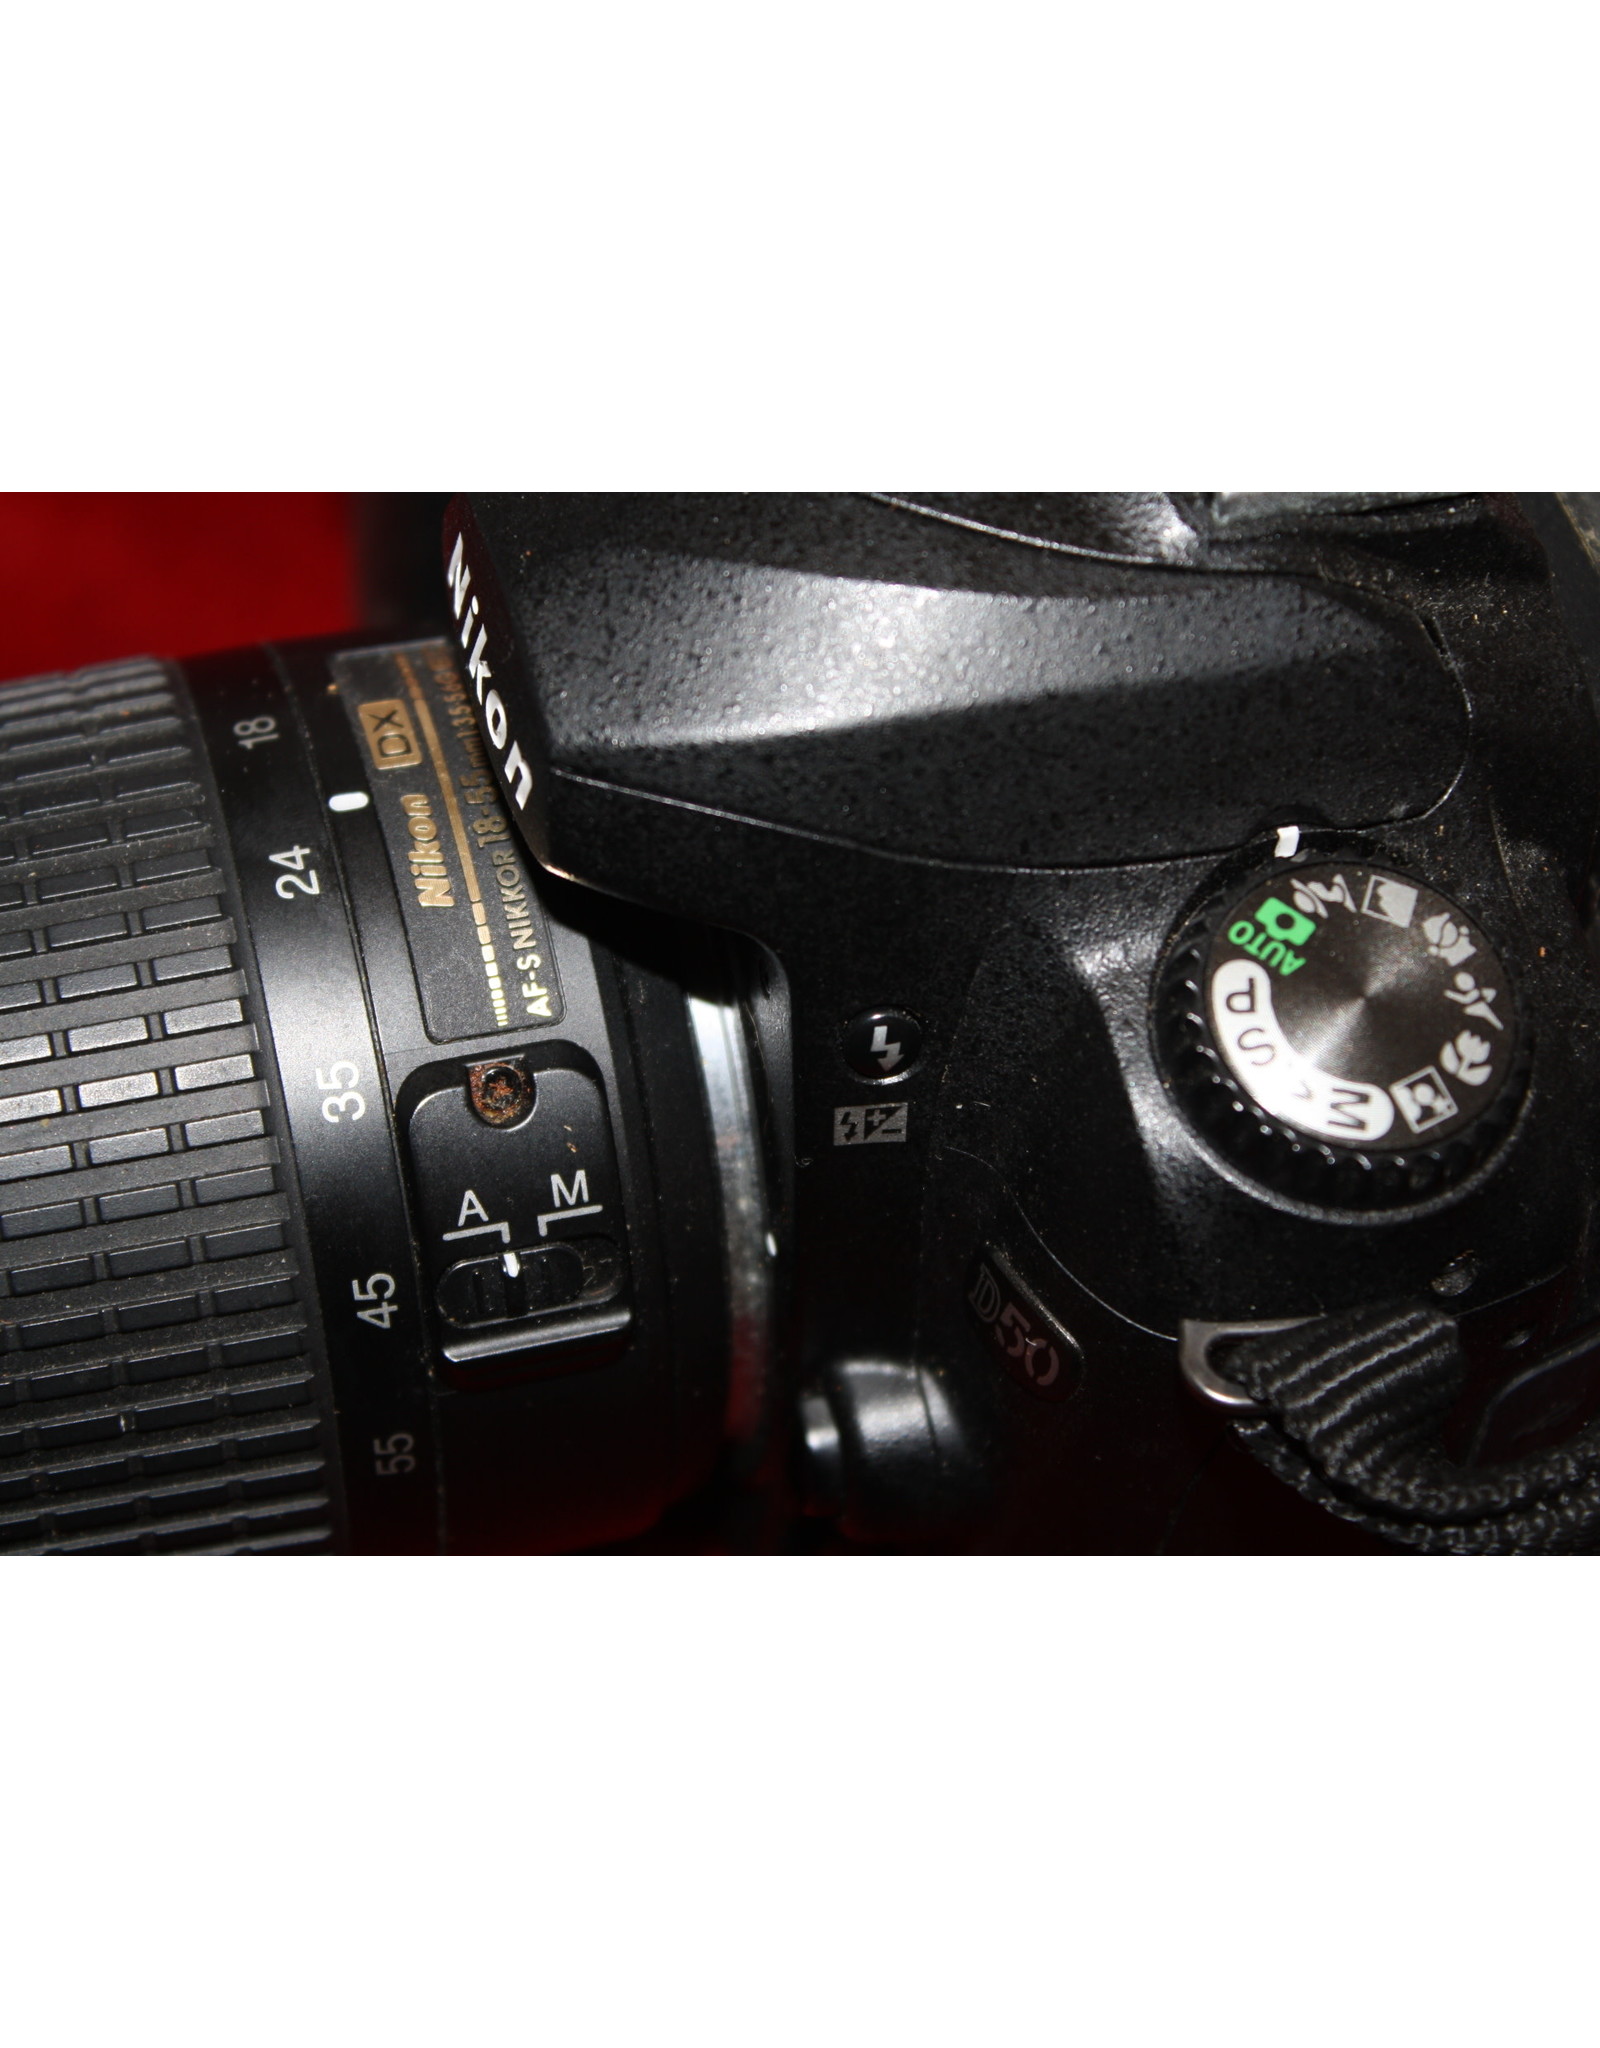 Nikon D50, cámara SLR digital de 6.1 MP